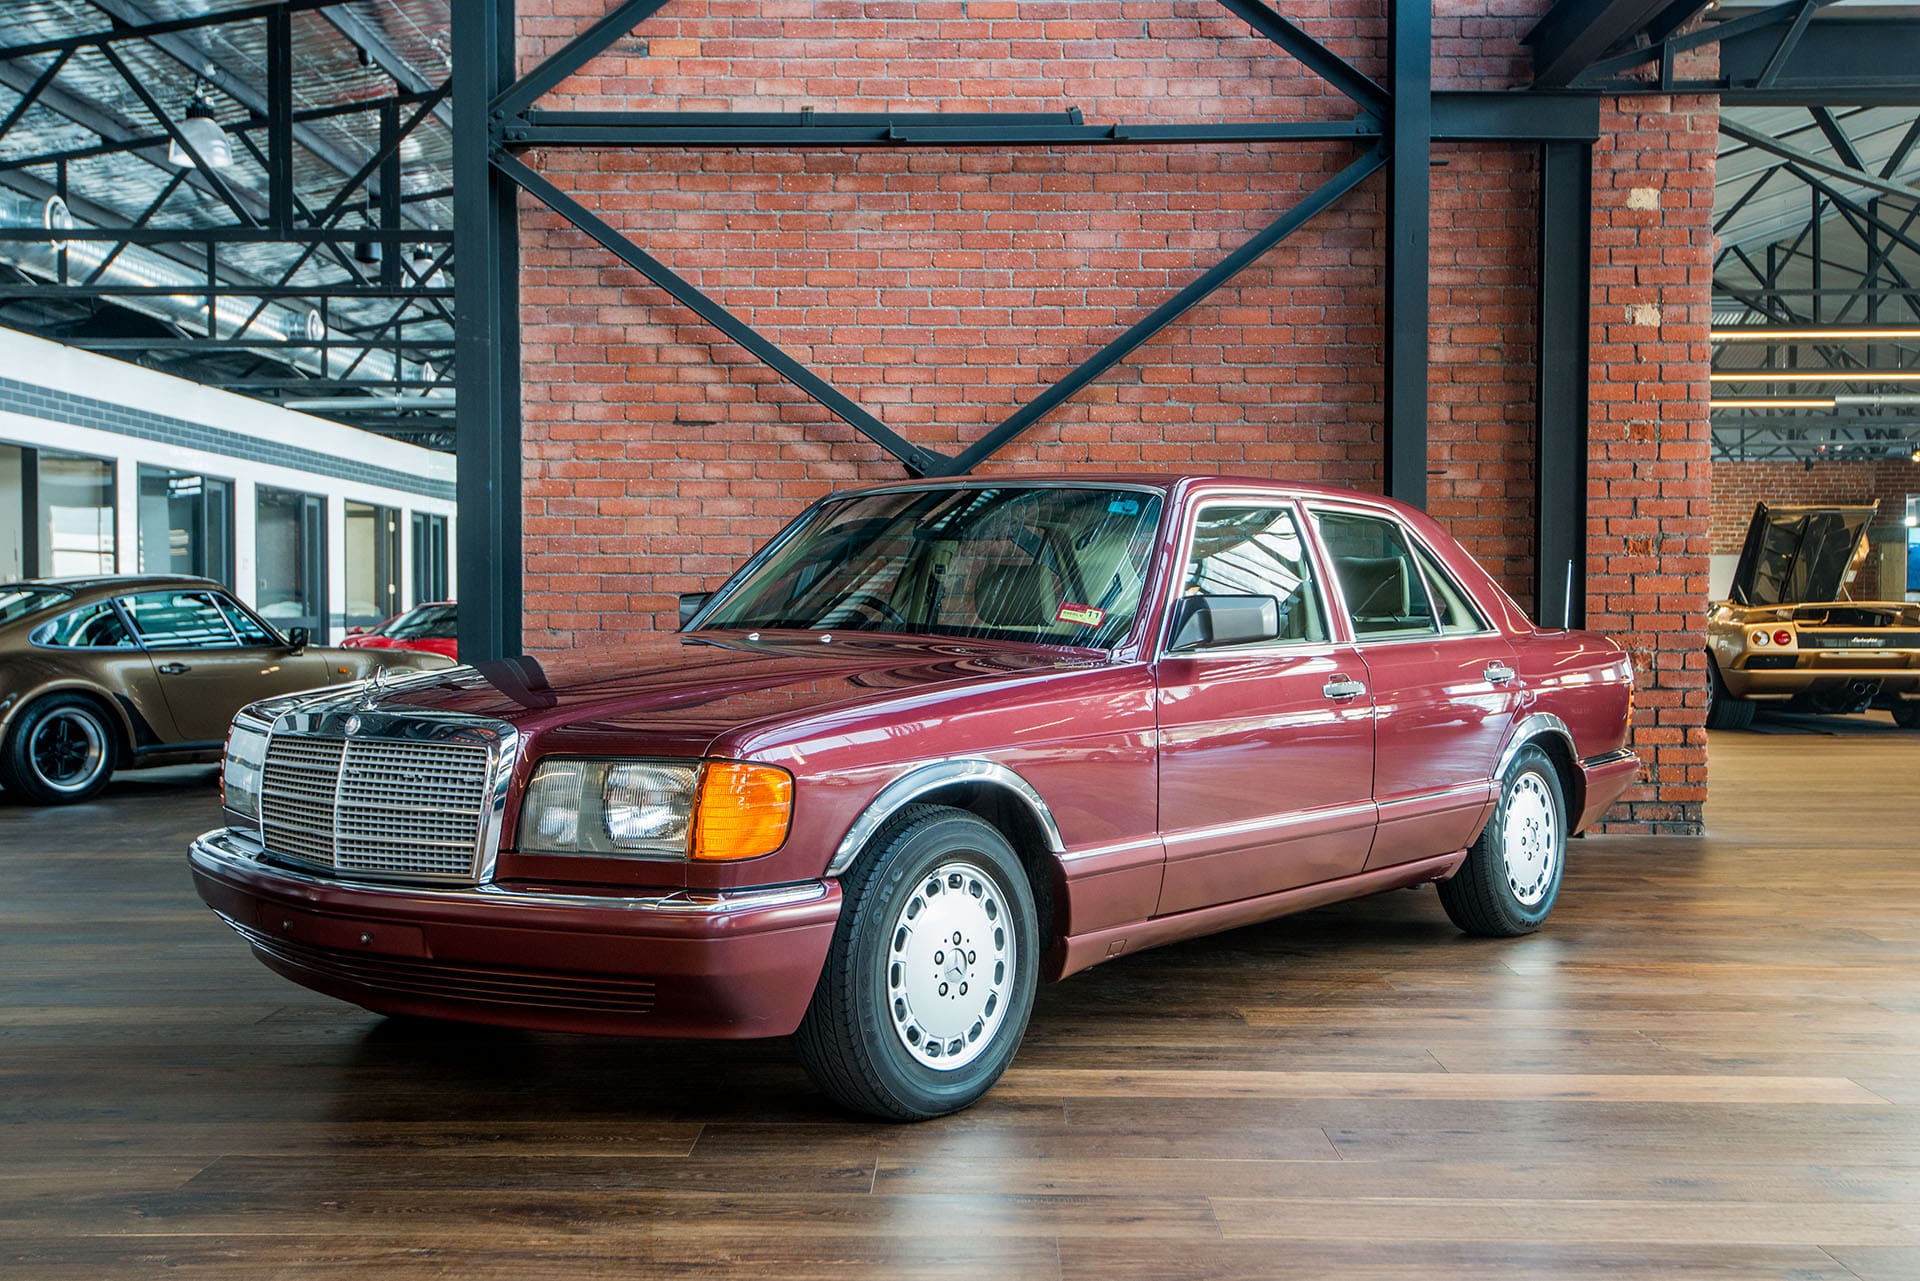 1989 Mercedes 300SE - Richmonds - Classic and Prestige Cars - Storage